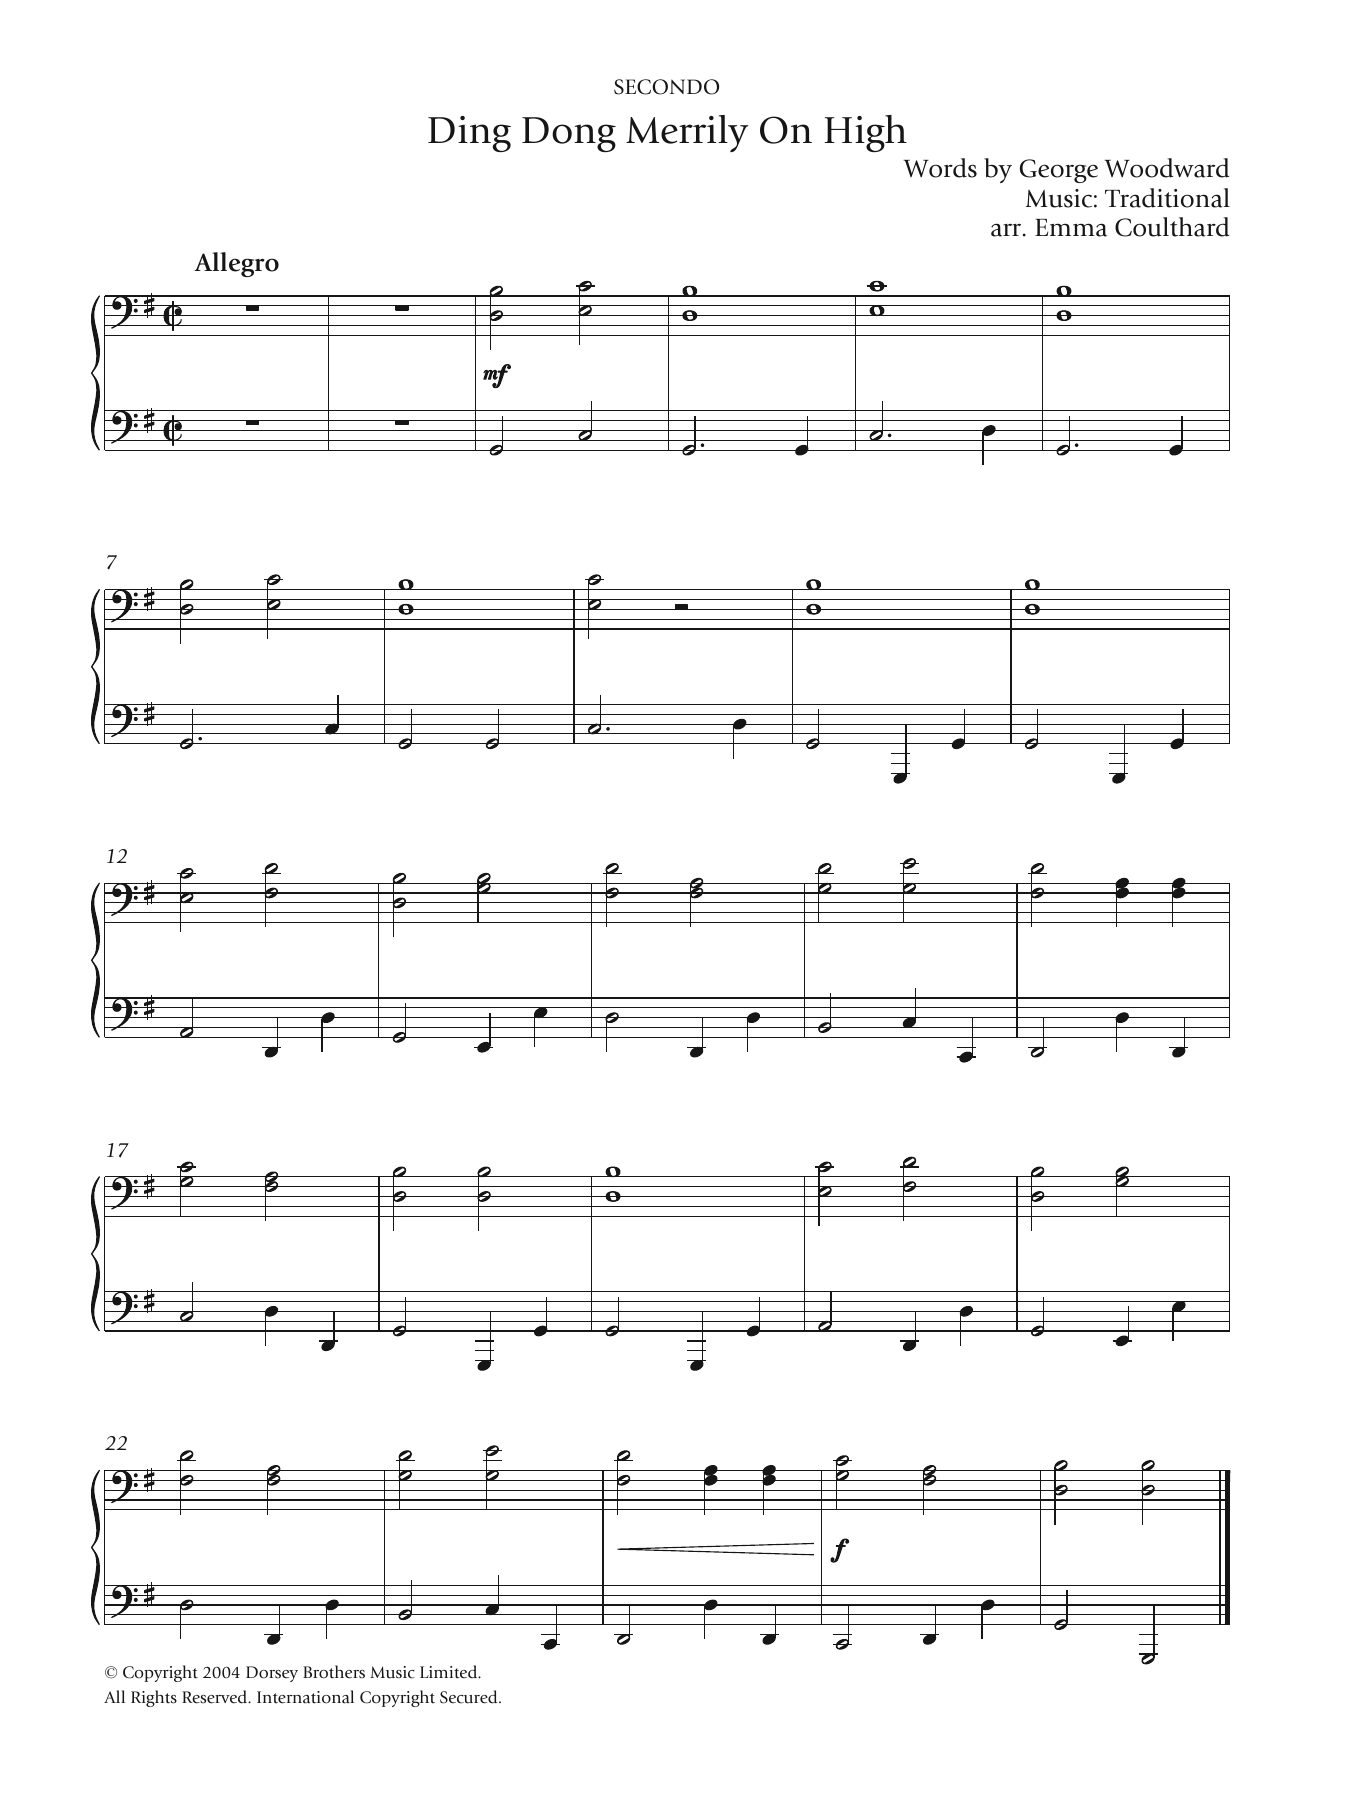 Christmas Carol Ding Dong! Merrily On High Sheet Music Notes & Chords for Lyrics & Chords - Download or Print PDF